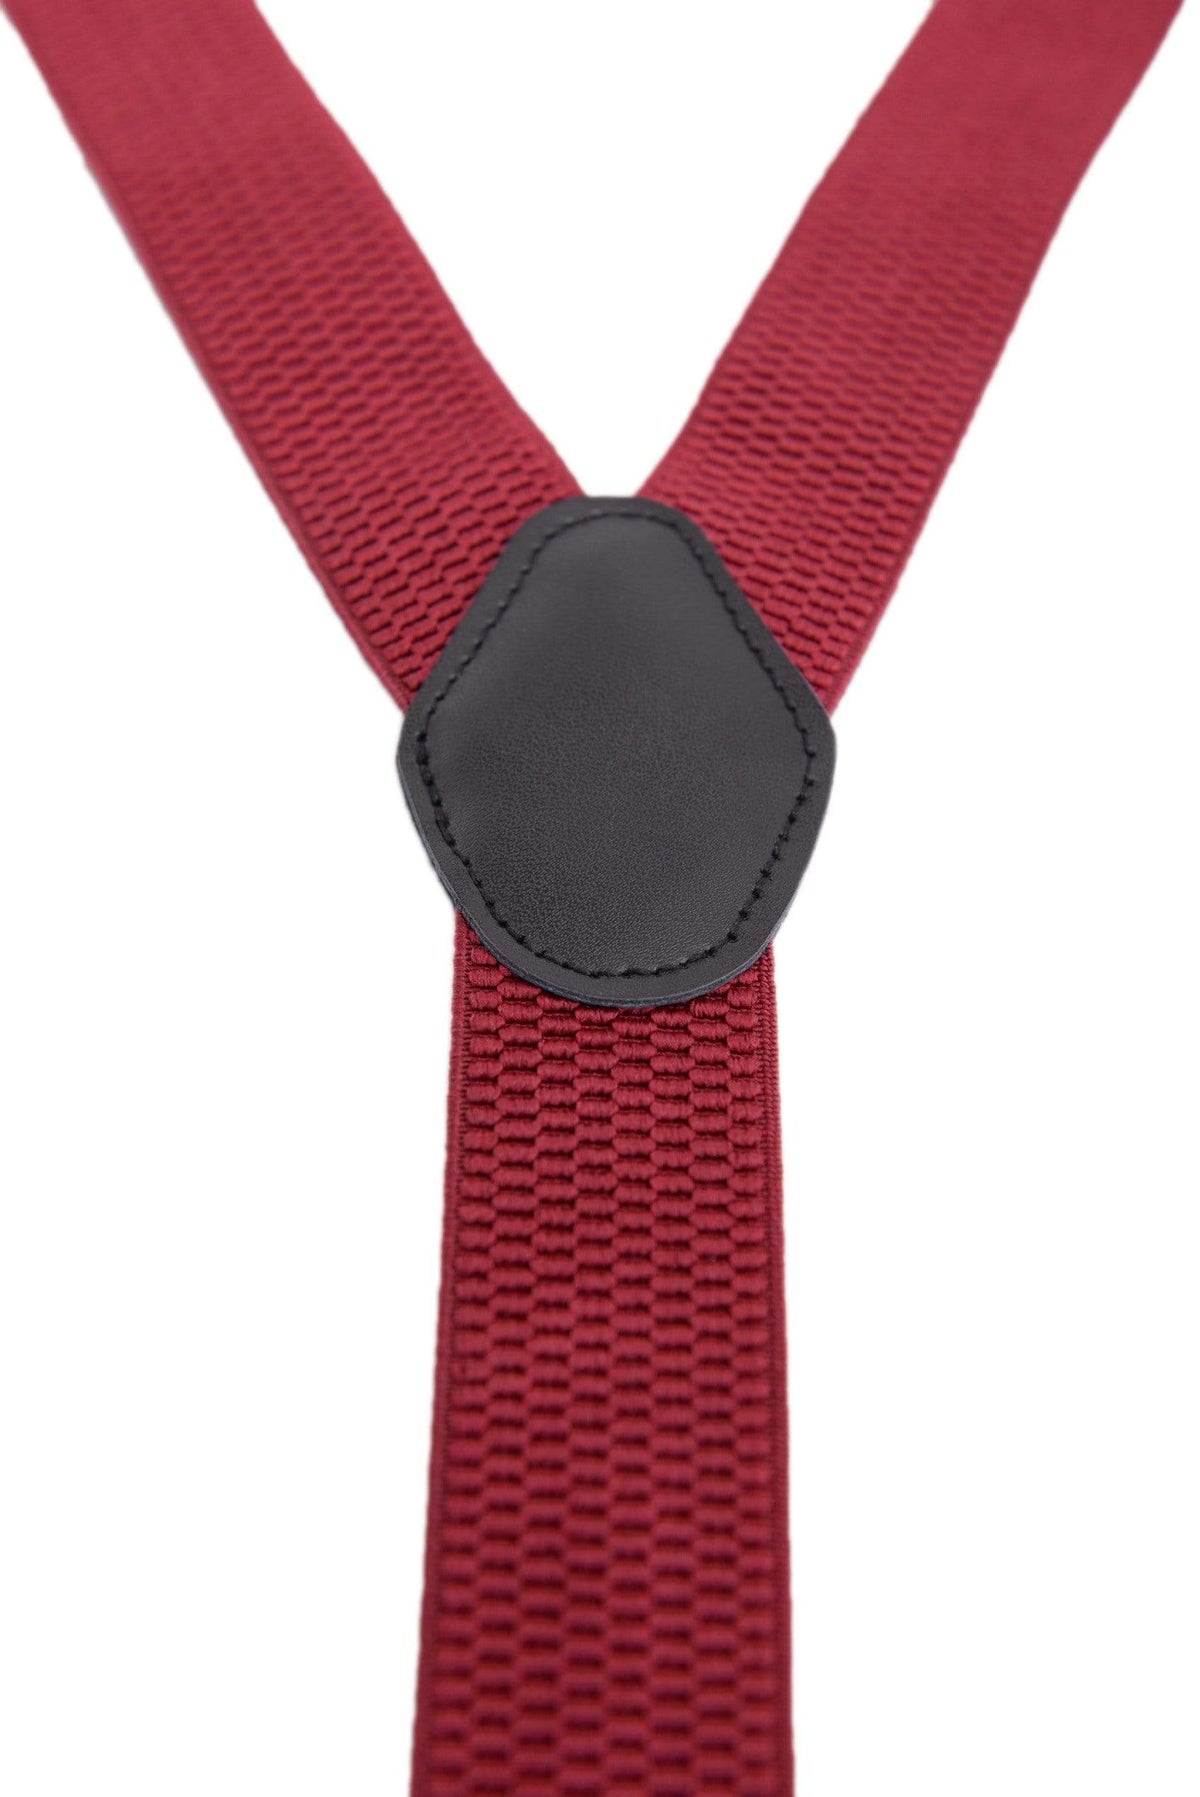 Ariston Suspenders Mens Button Black Leather Braces Adjustable Y Back Suspenders Xlong Available